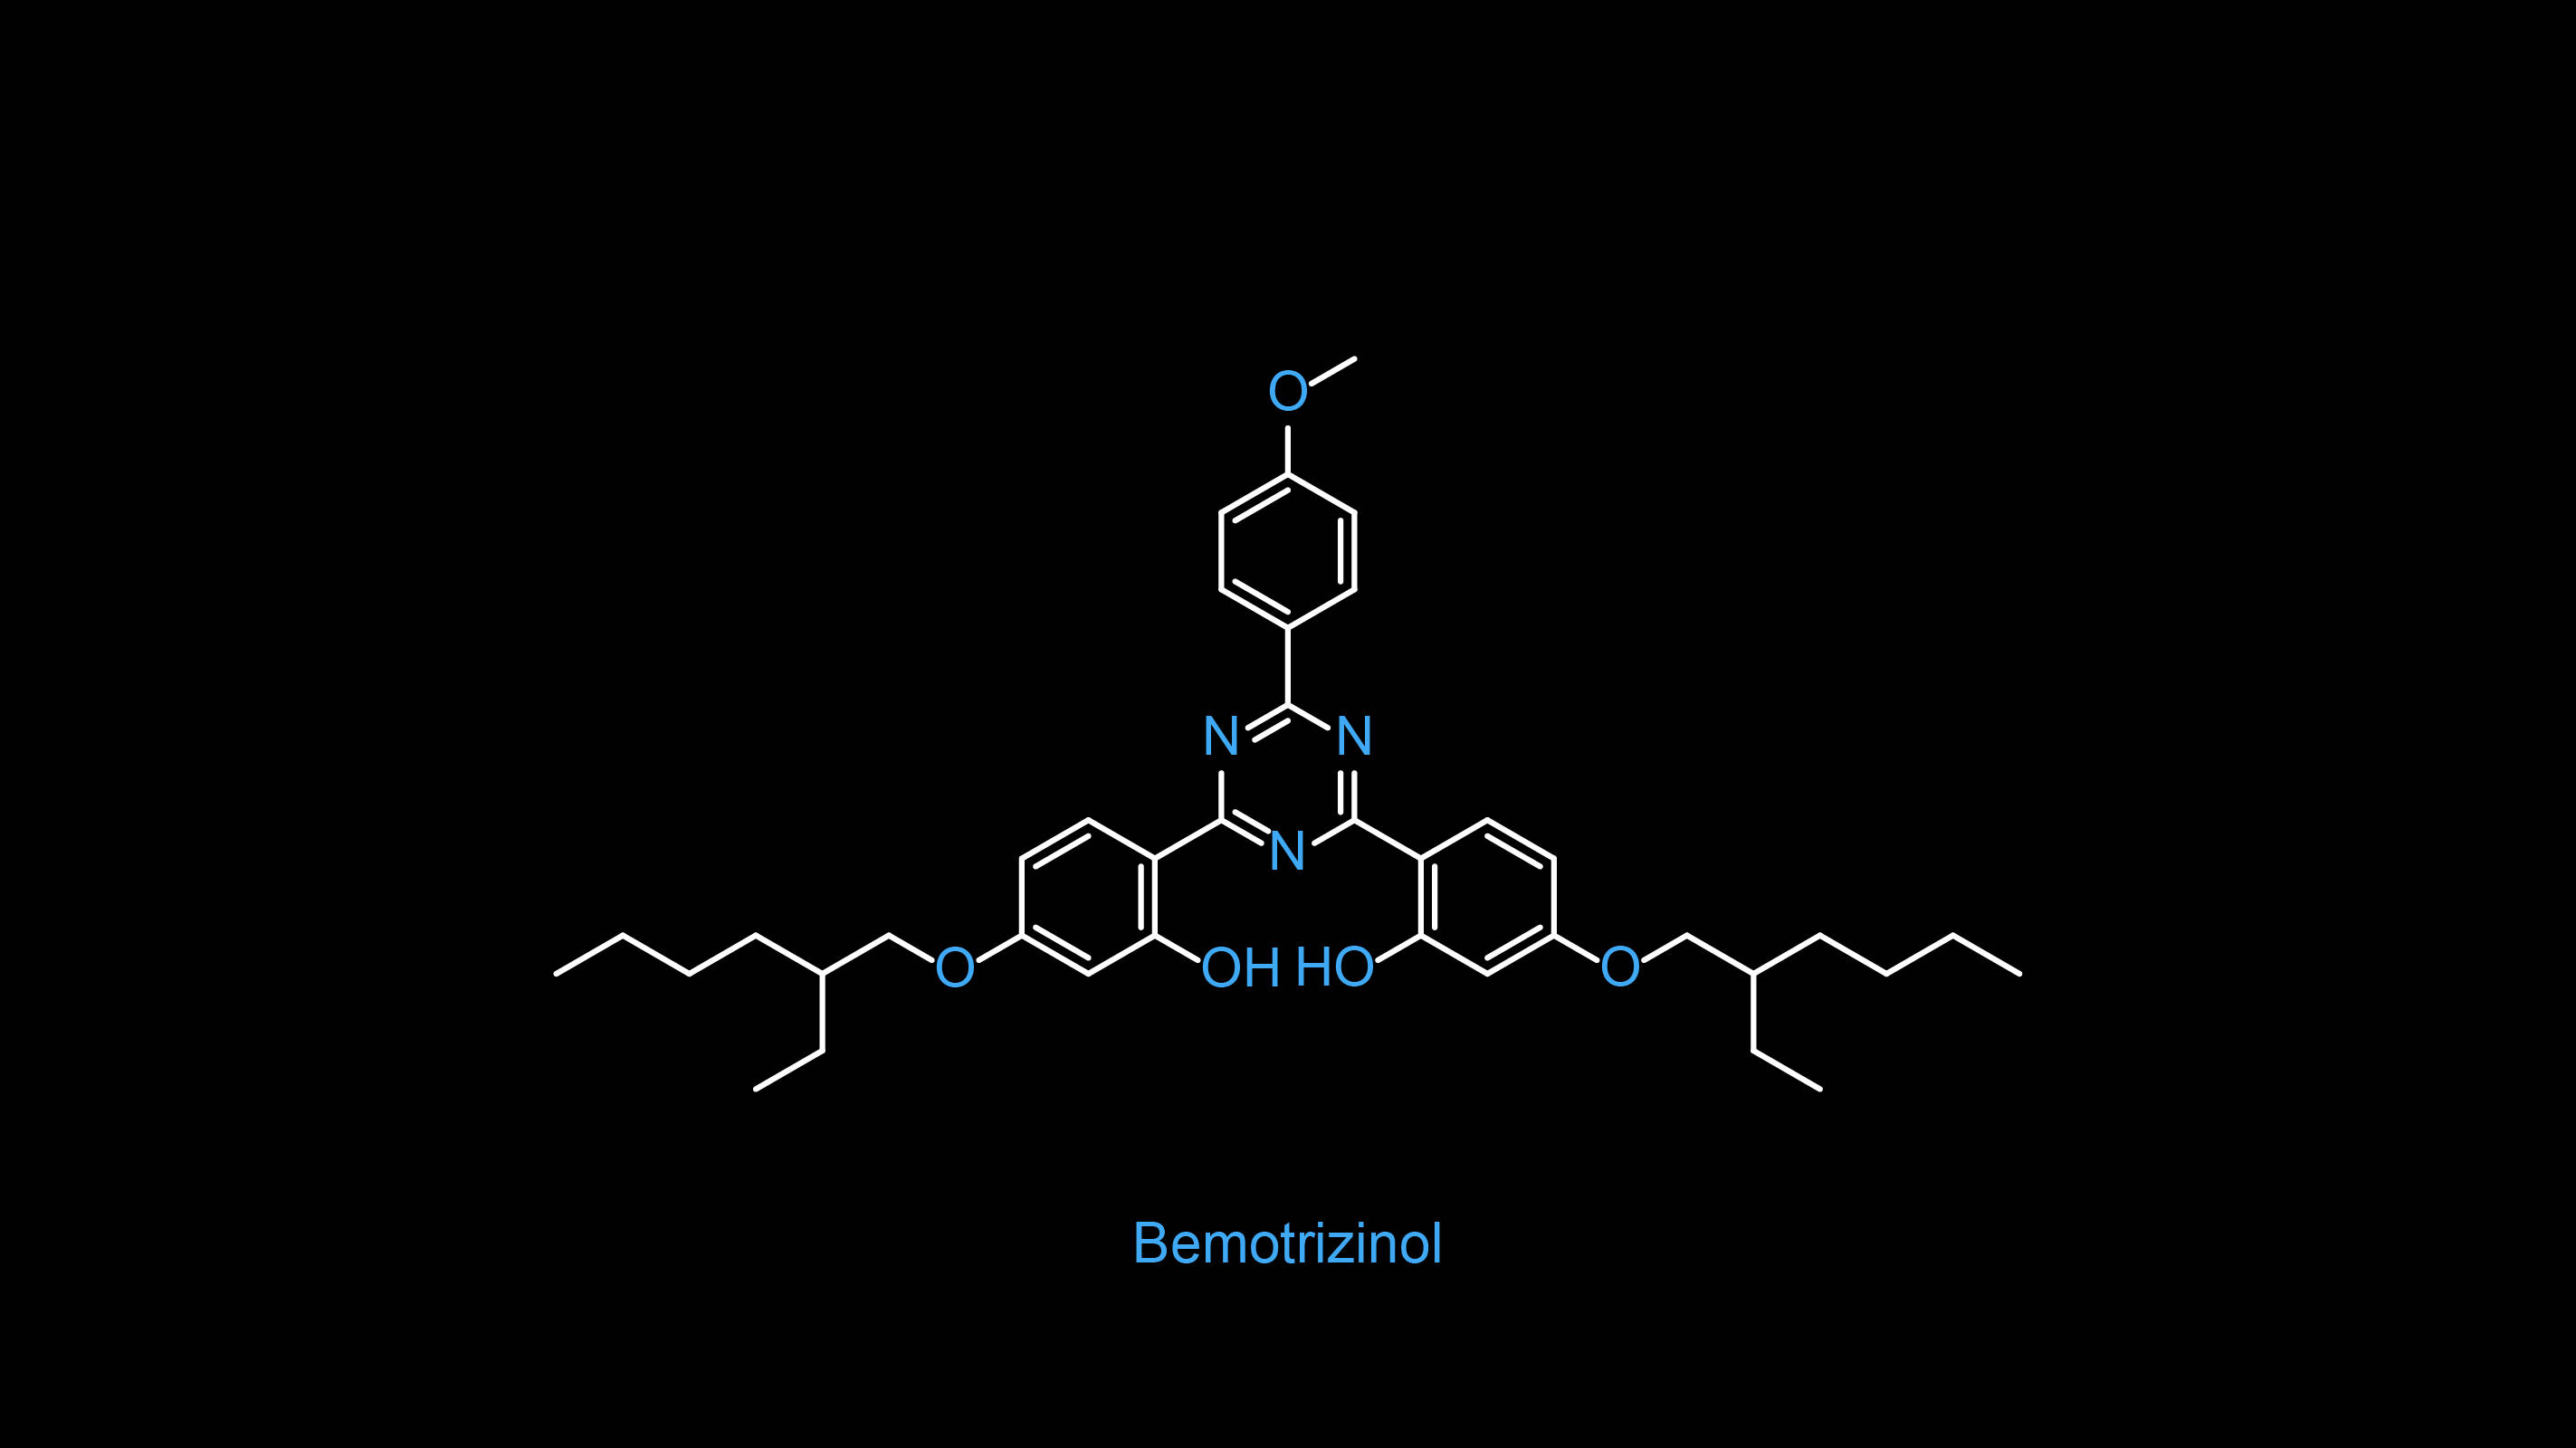 Download Chemistry Bemotrizinol Chemical Formula Wallpaper